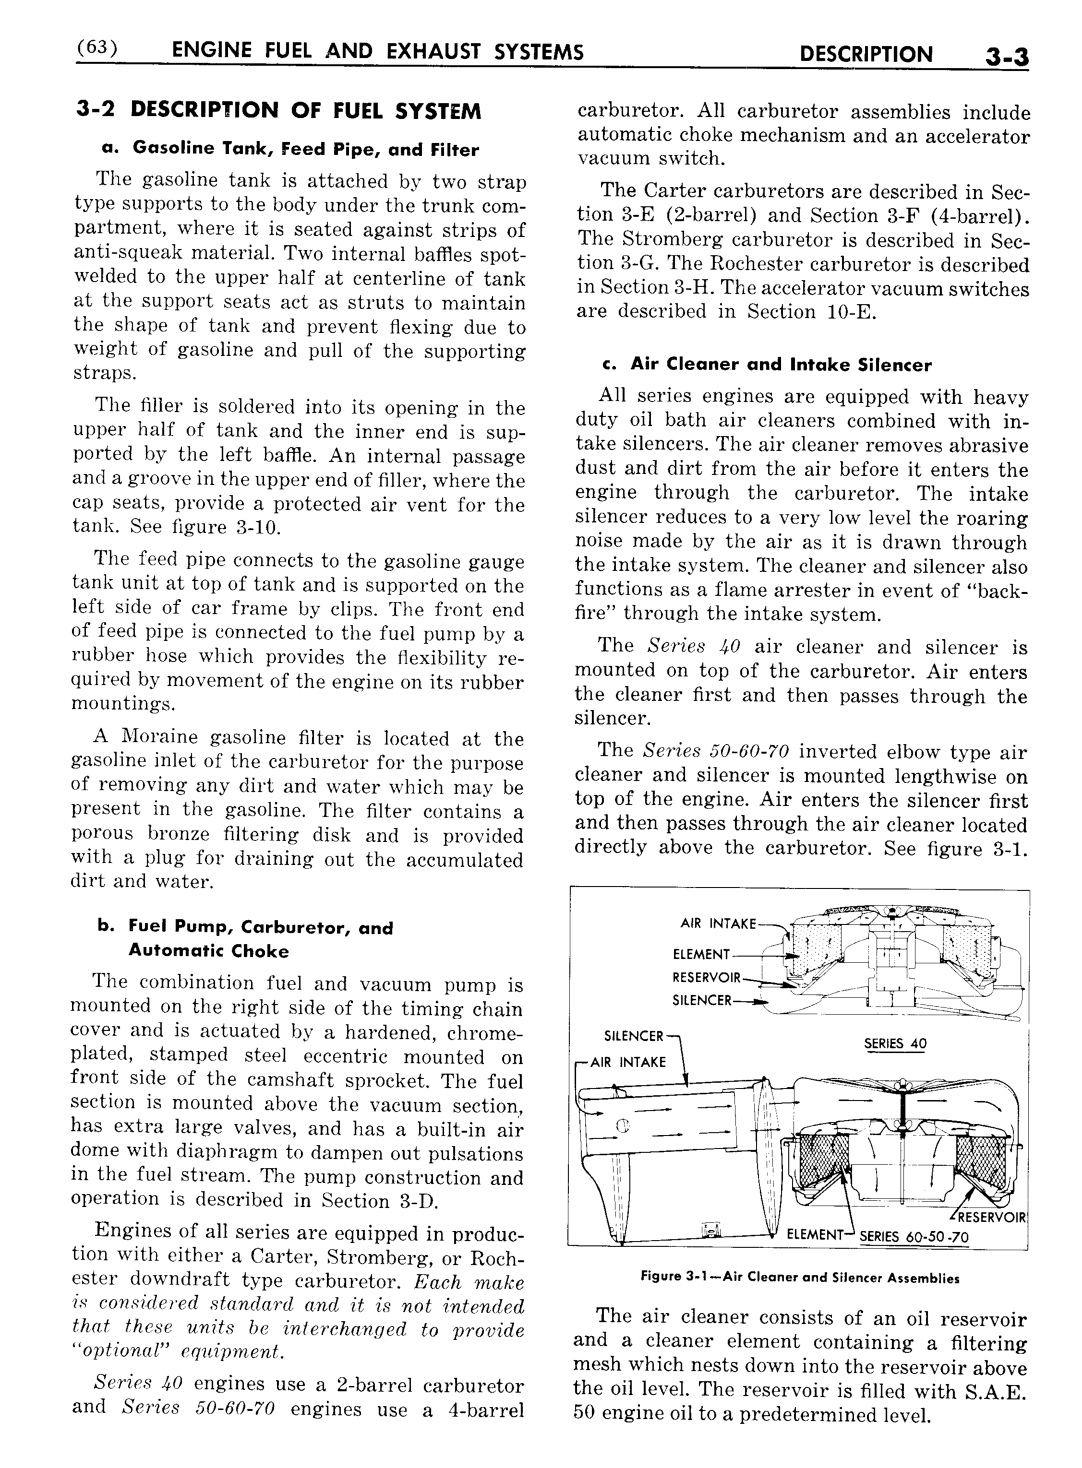 n_04 1956 Buick Shop Manual - Engine Fuel & Exhaust-003-003.jpg